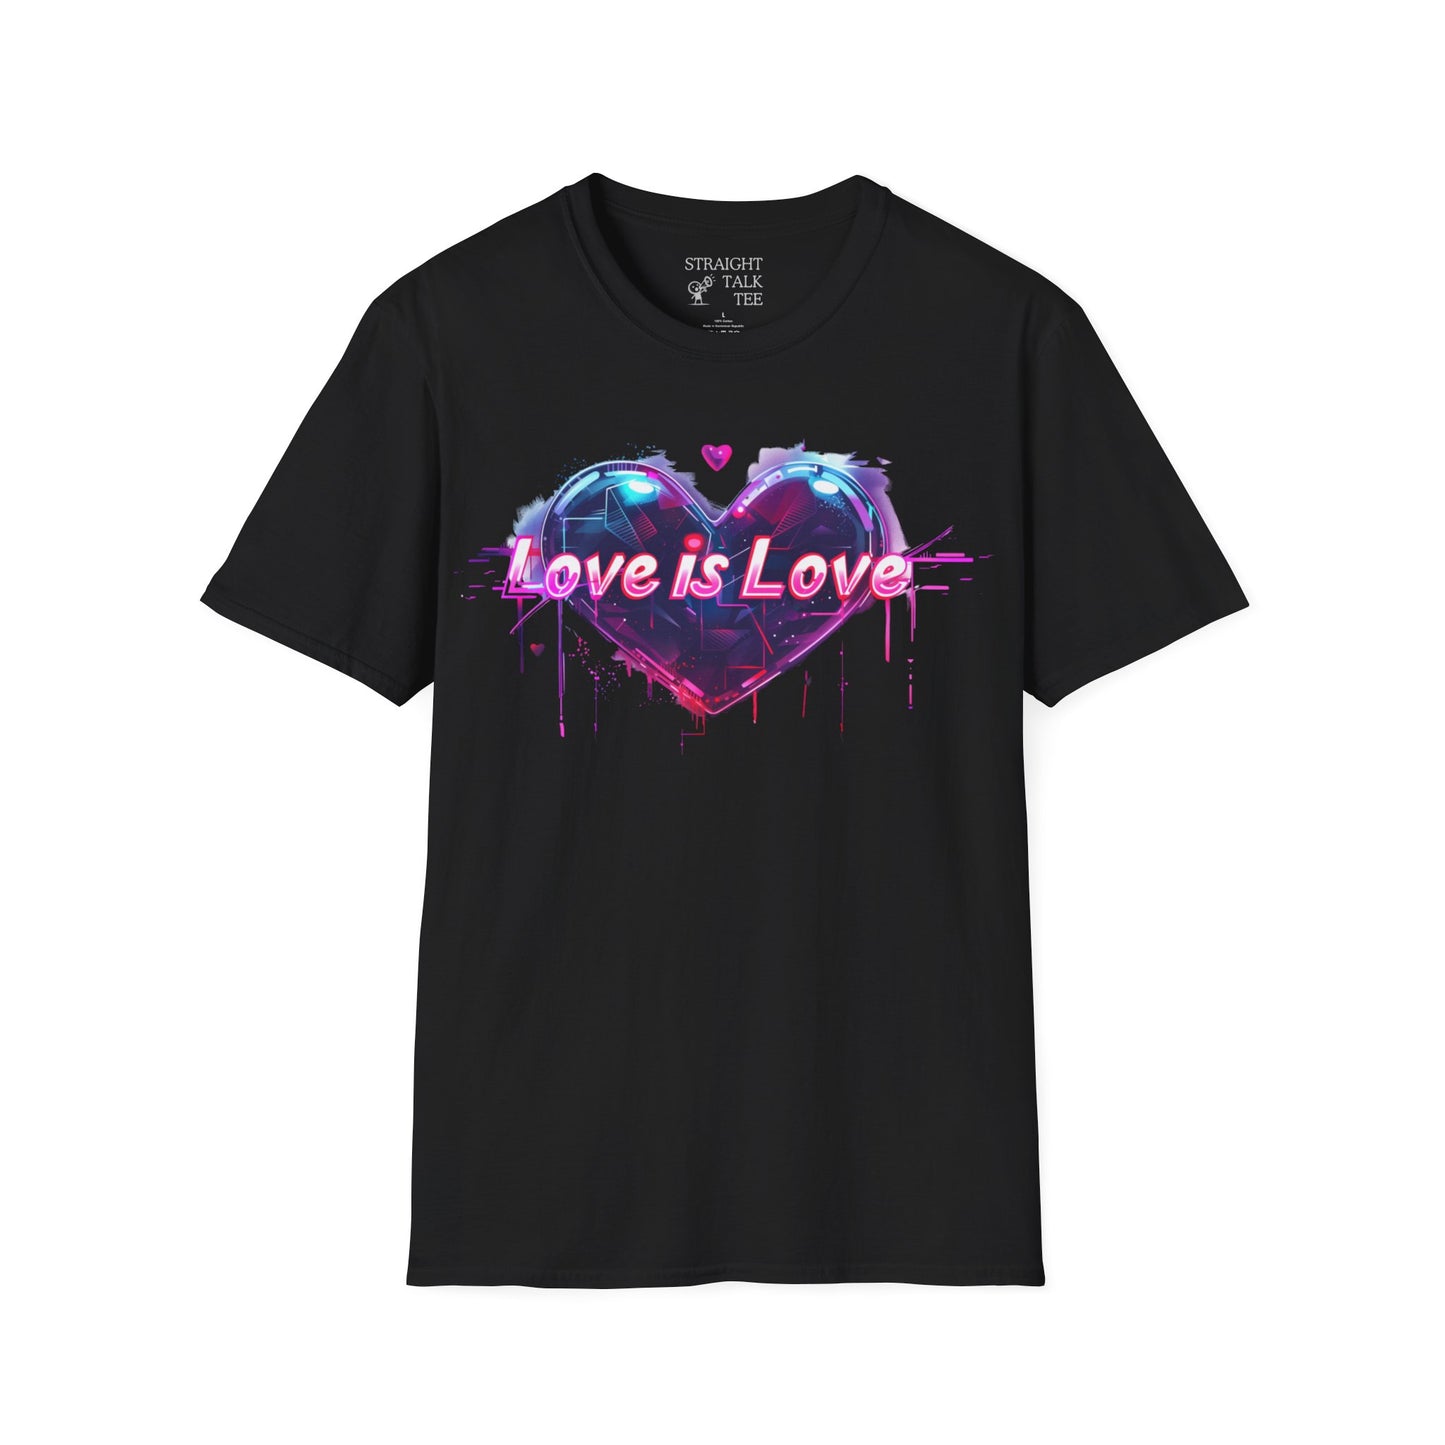 Love is Love Pride T-Shirt Political Shirt Vote Protest Punk Activism tshirt Statement Equality tee Leftist Liberal Shirt Demand Respect